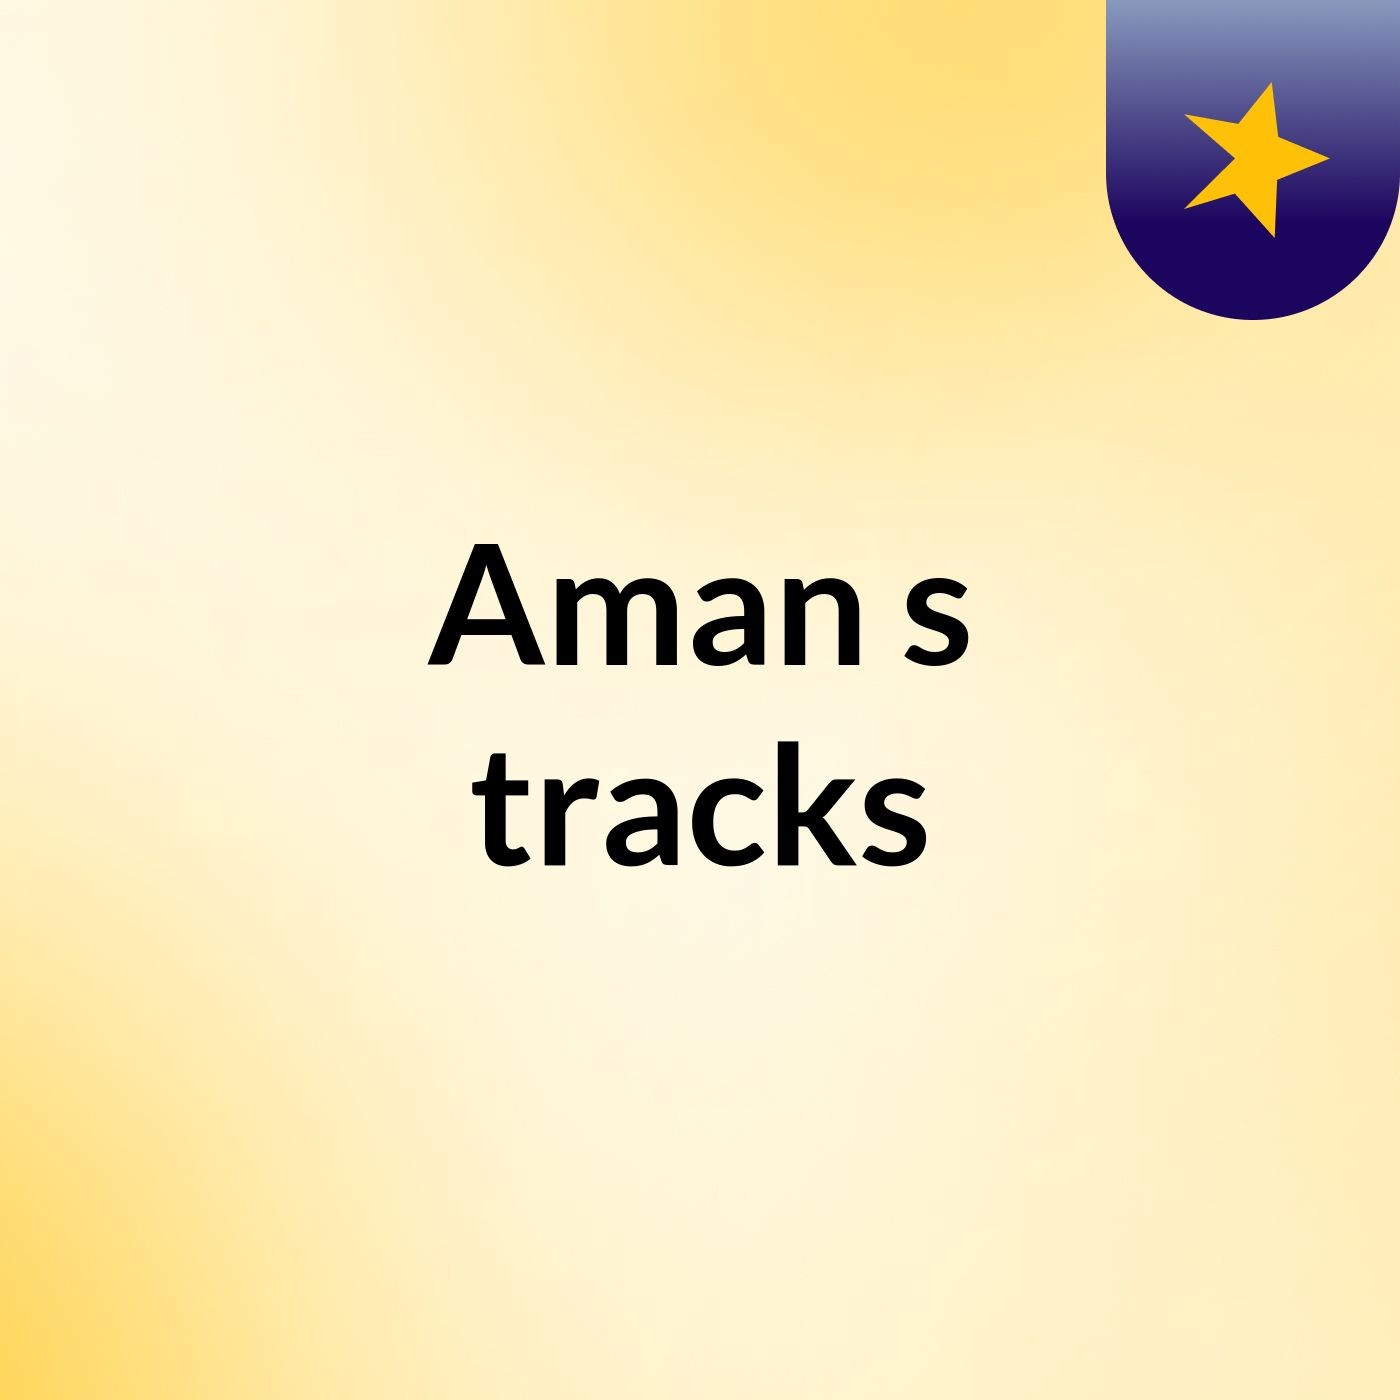 Aman's tracks